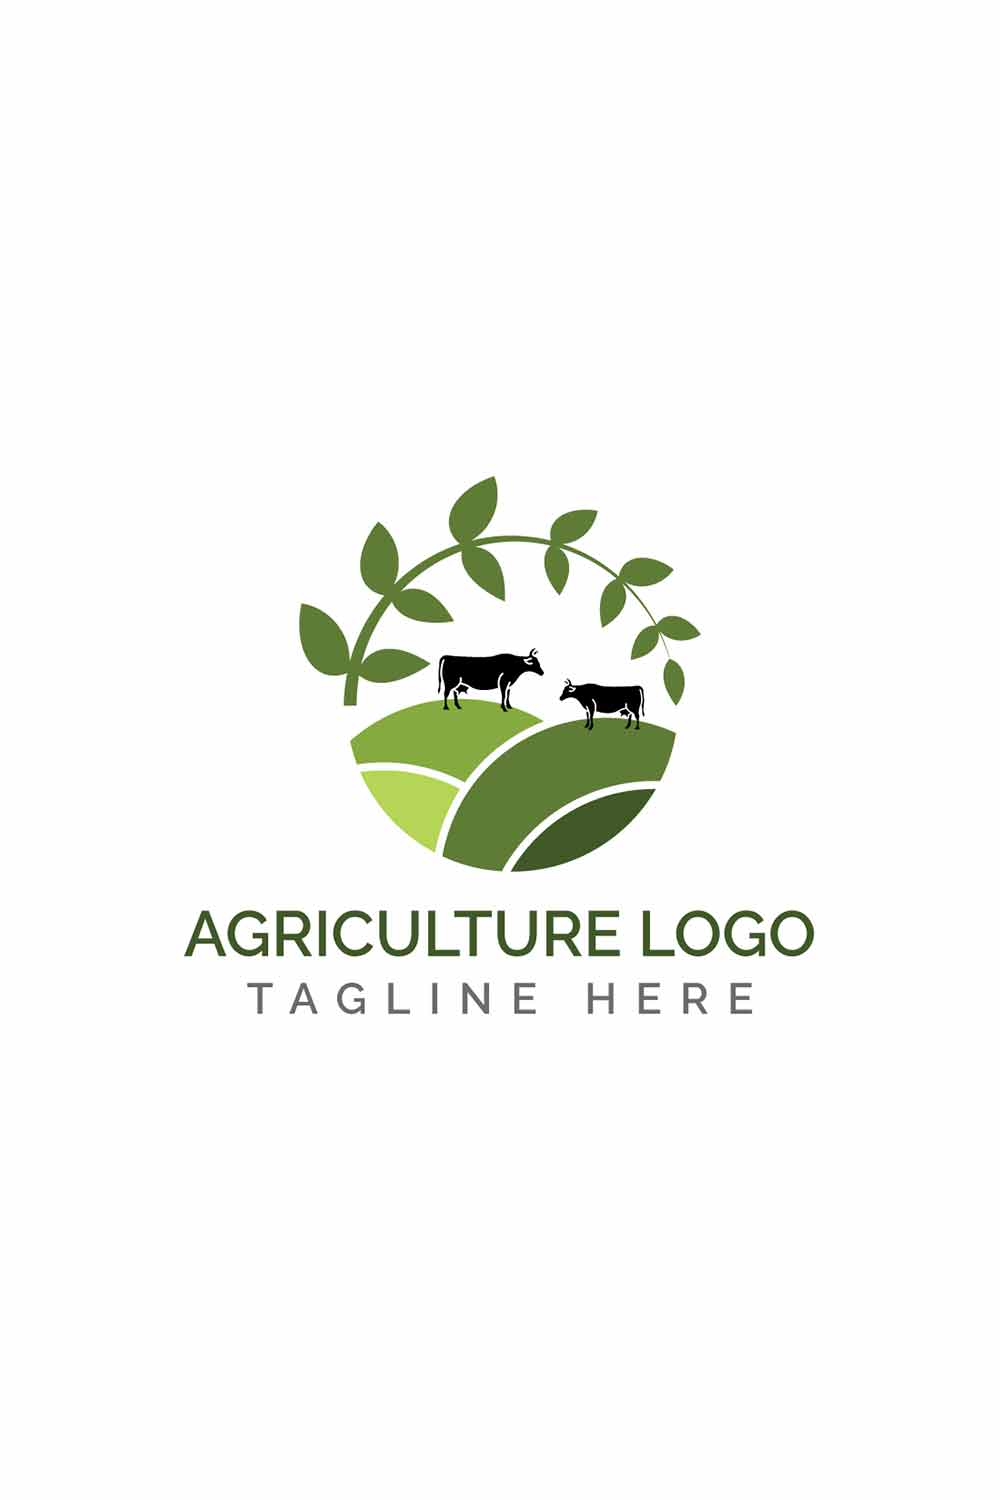 AGRICULTURE Logo Design pinterest preview image.